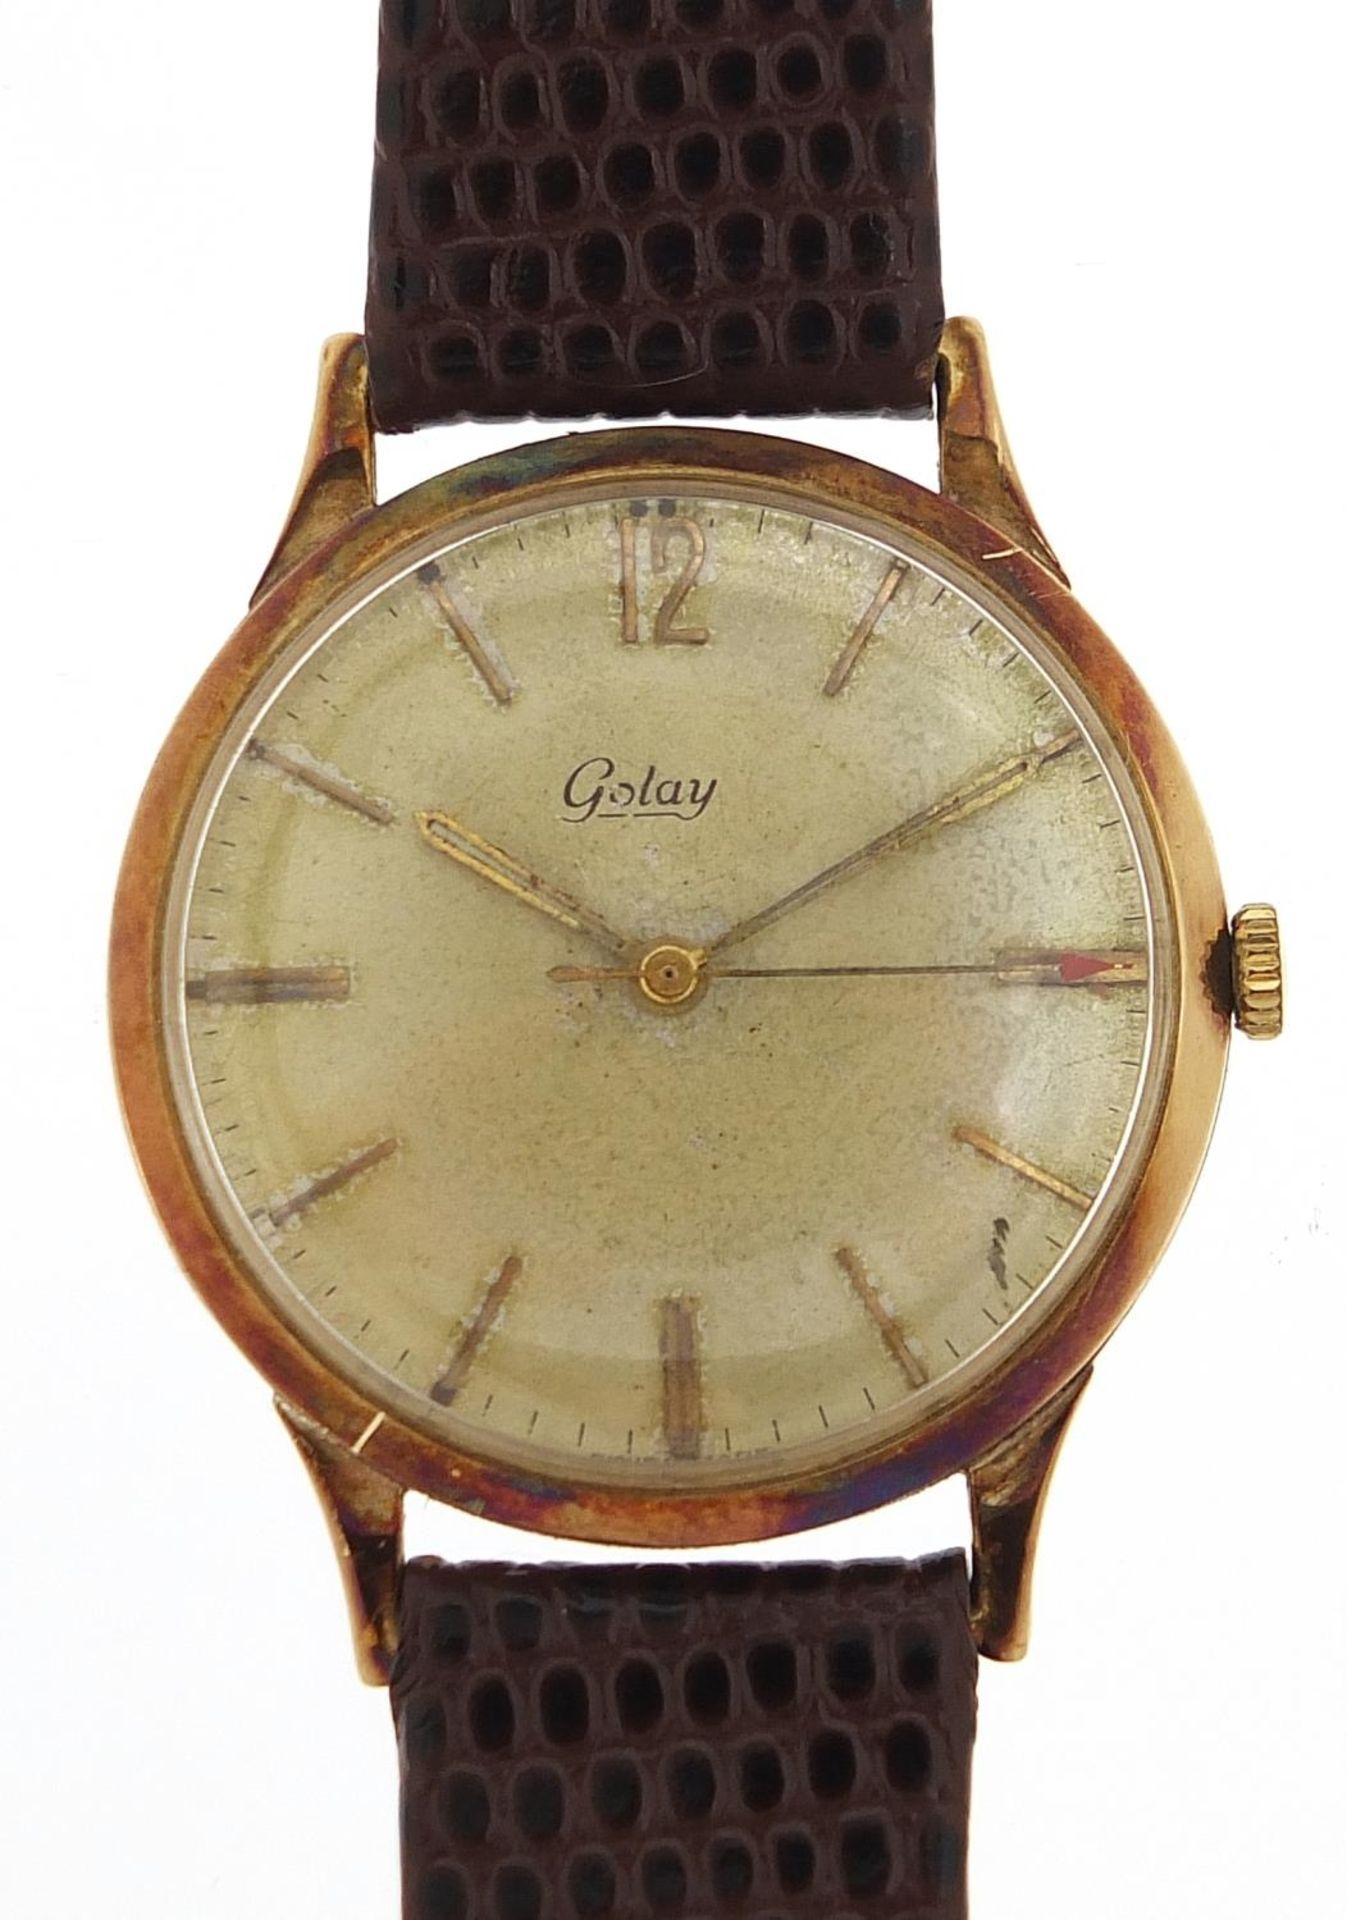 Golay, gentlemen's 9ct gold wristwatch, the case numbered 53238, 32mm in diameter